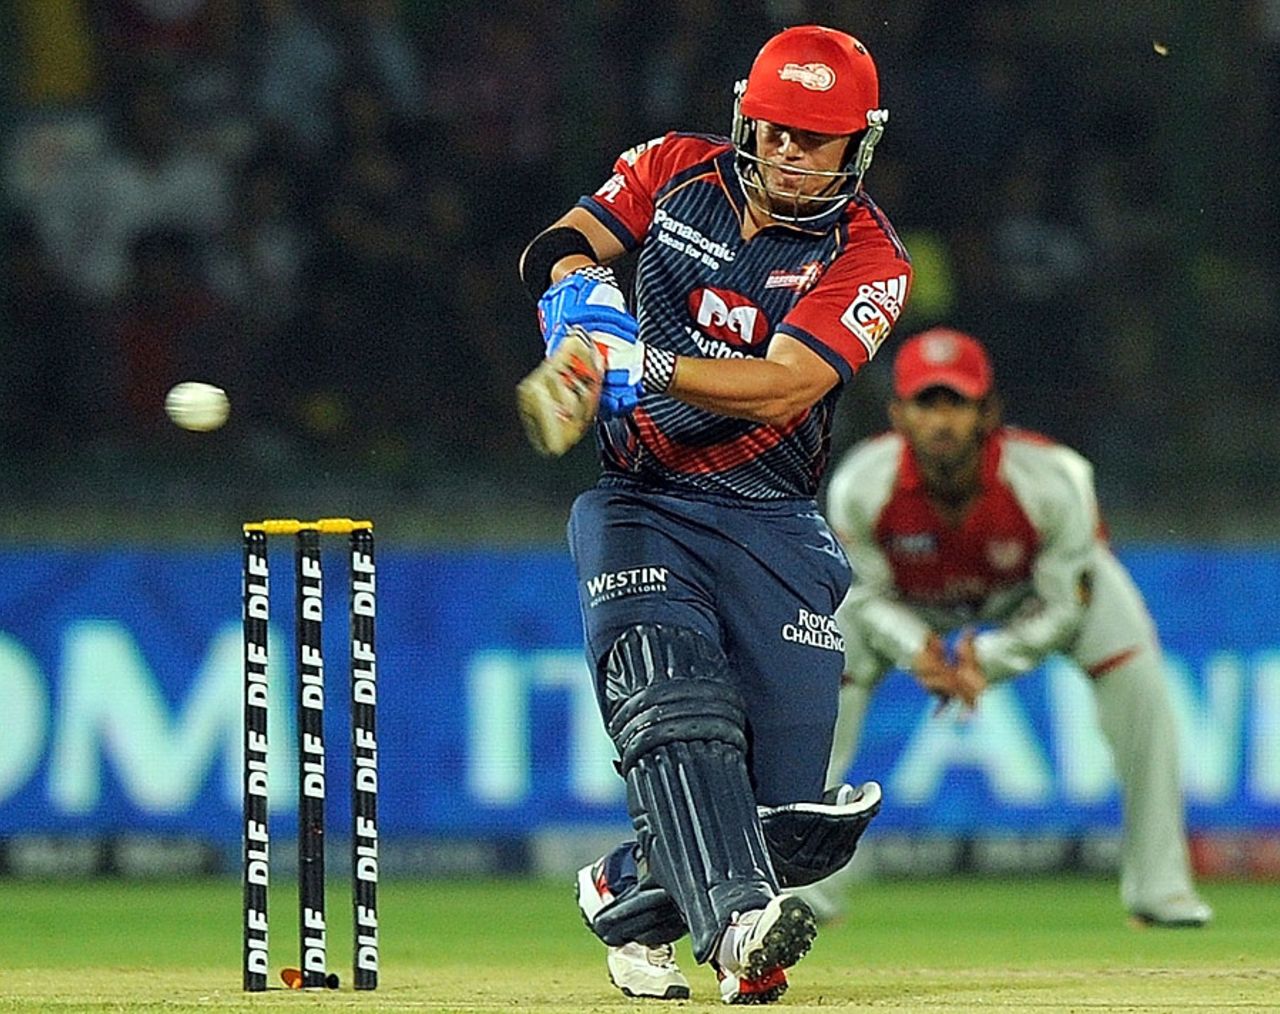 David Warner smashes a short ball through the leg side, Delhi Daredevils v Kings XI Punjab, IPL 2011, Delhi, April 23, 2011